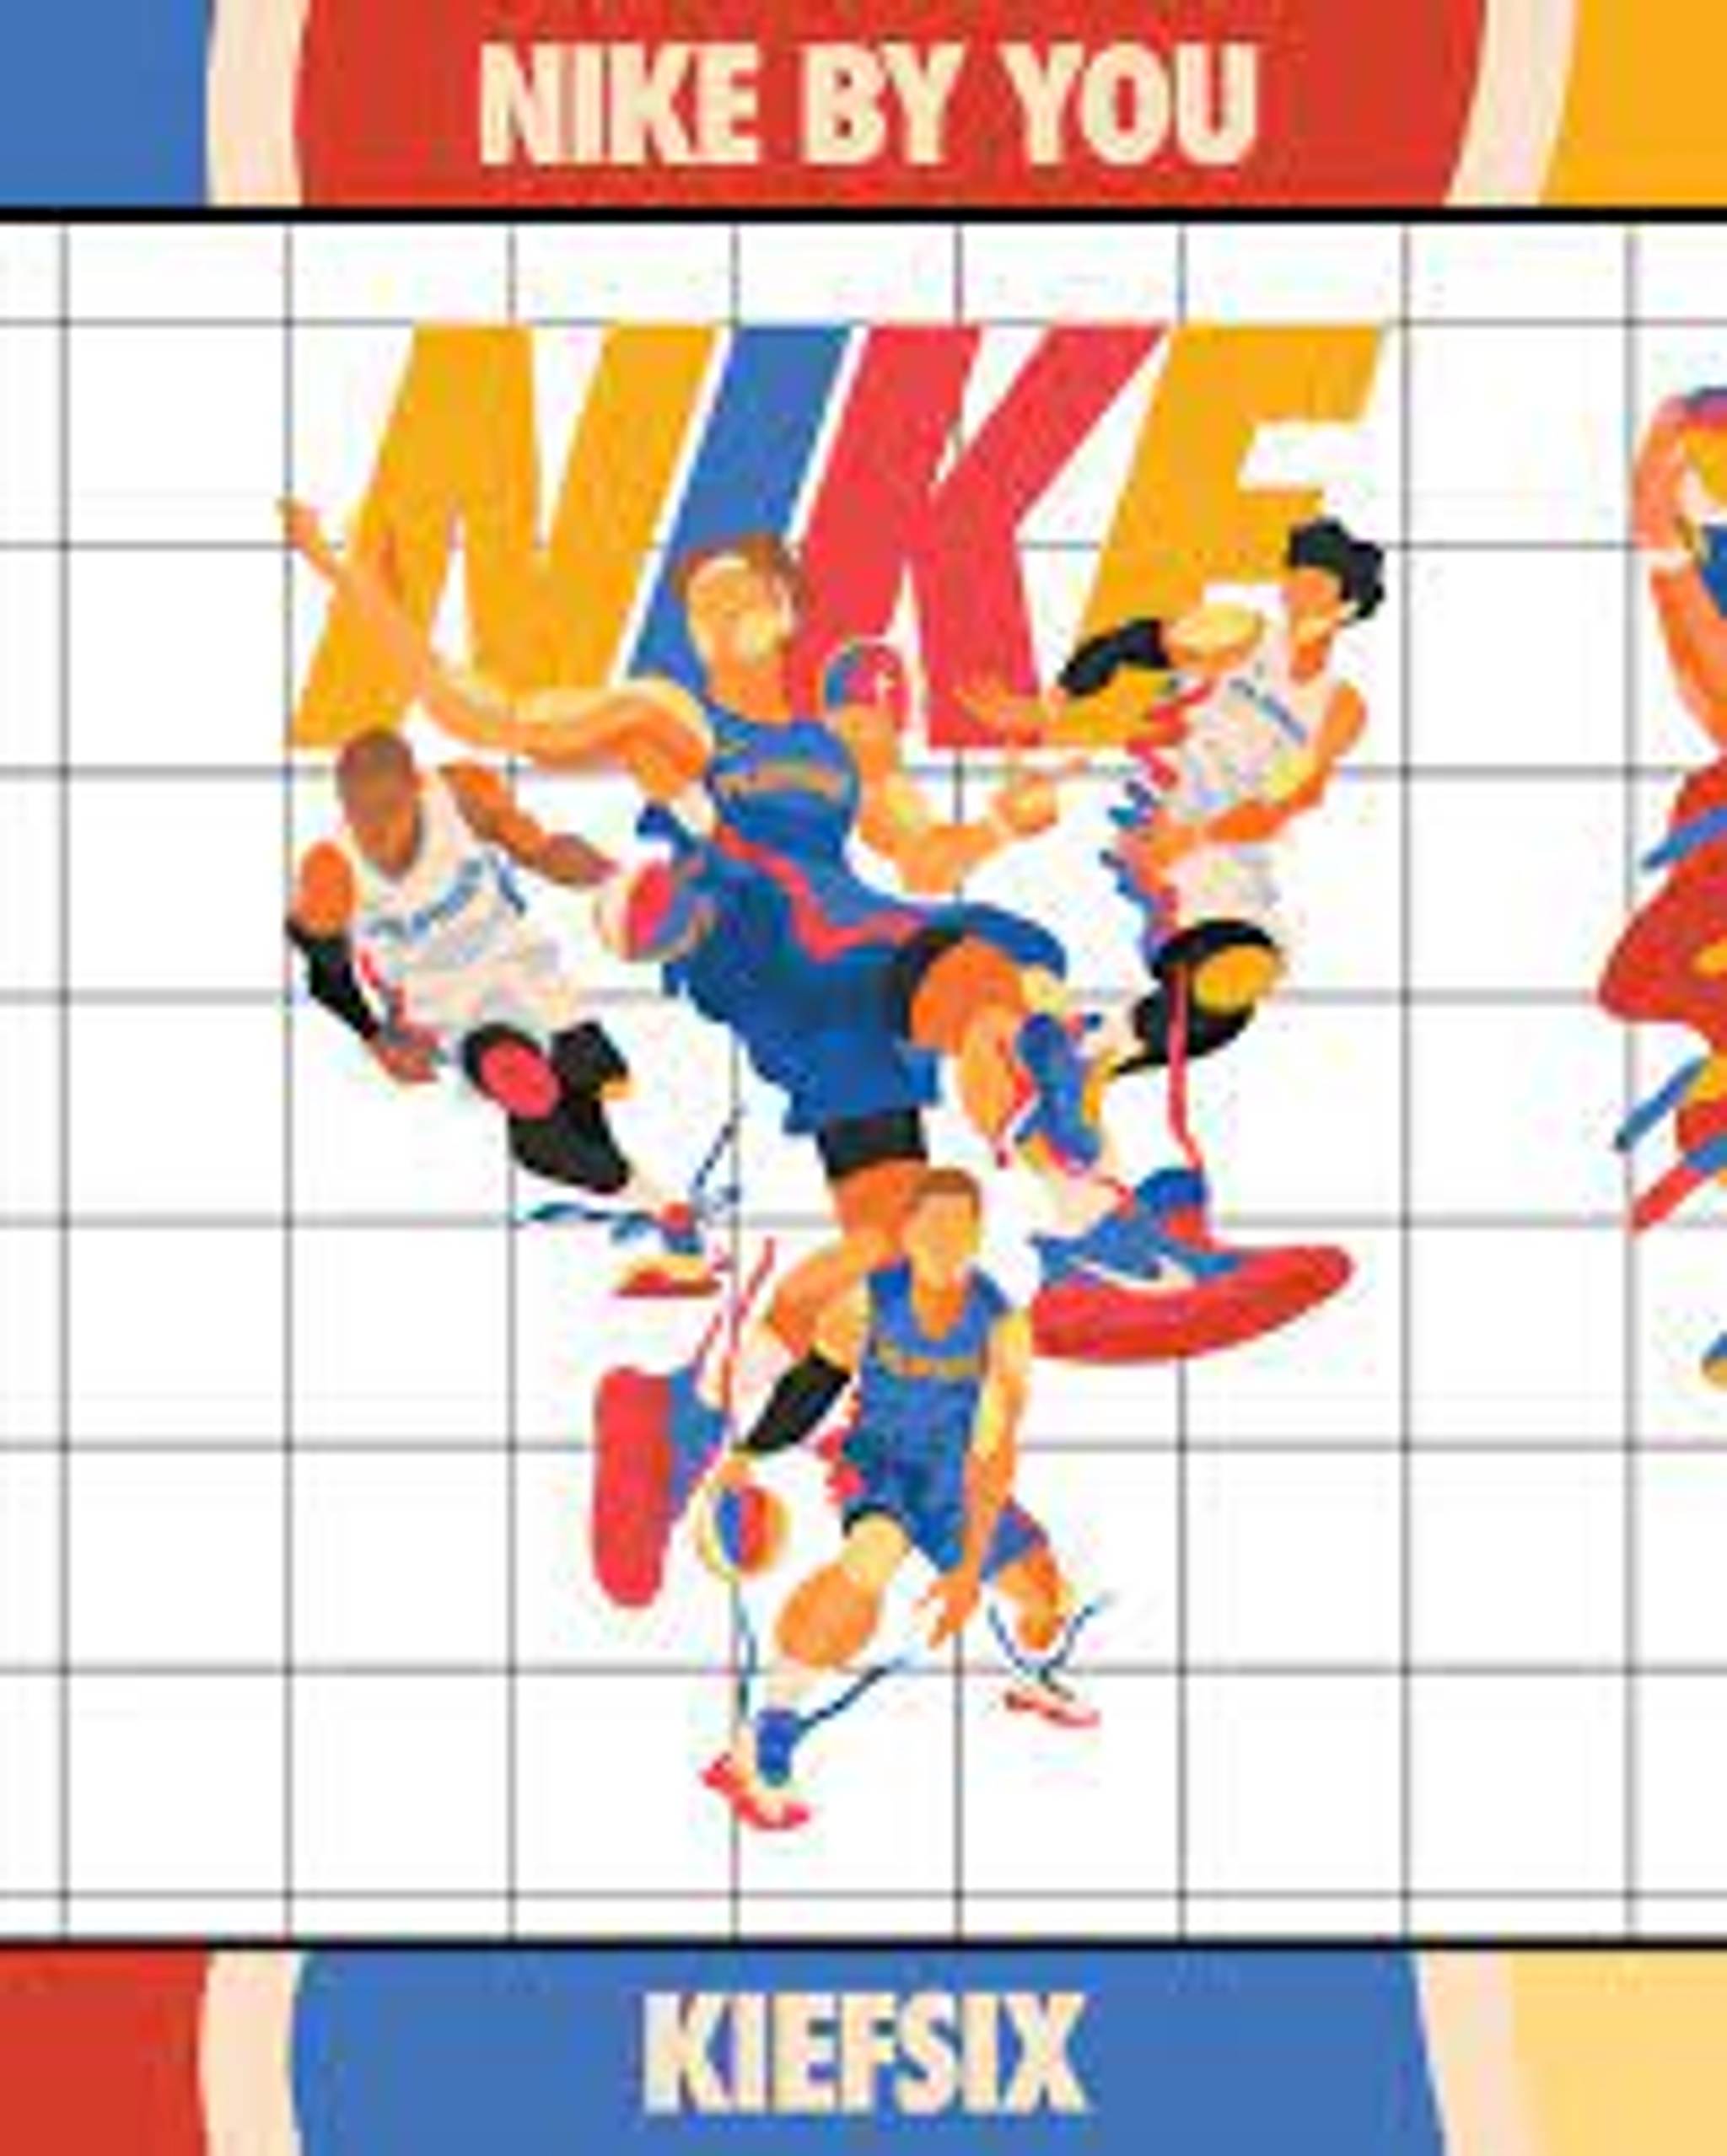 Nike initiative courts Filipino basketball fans